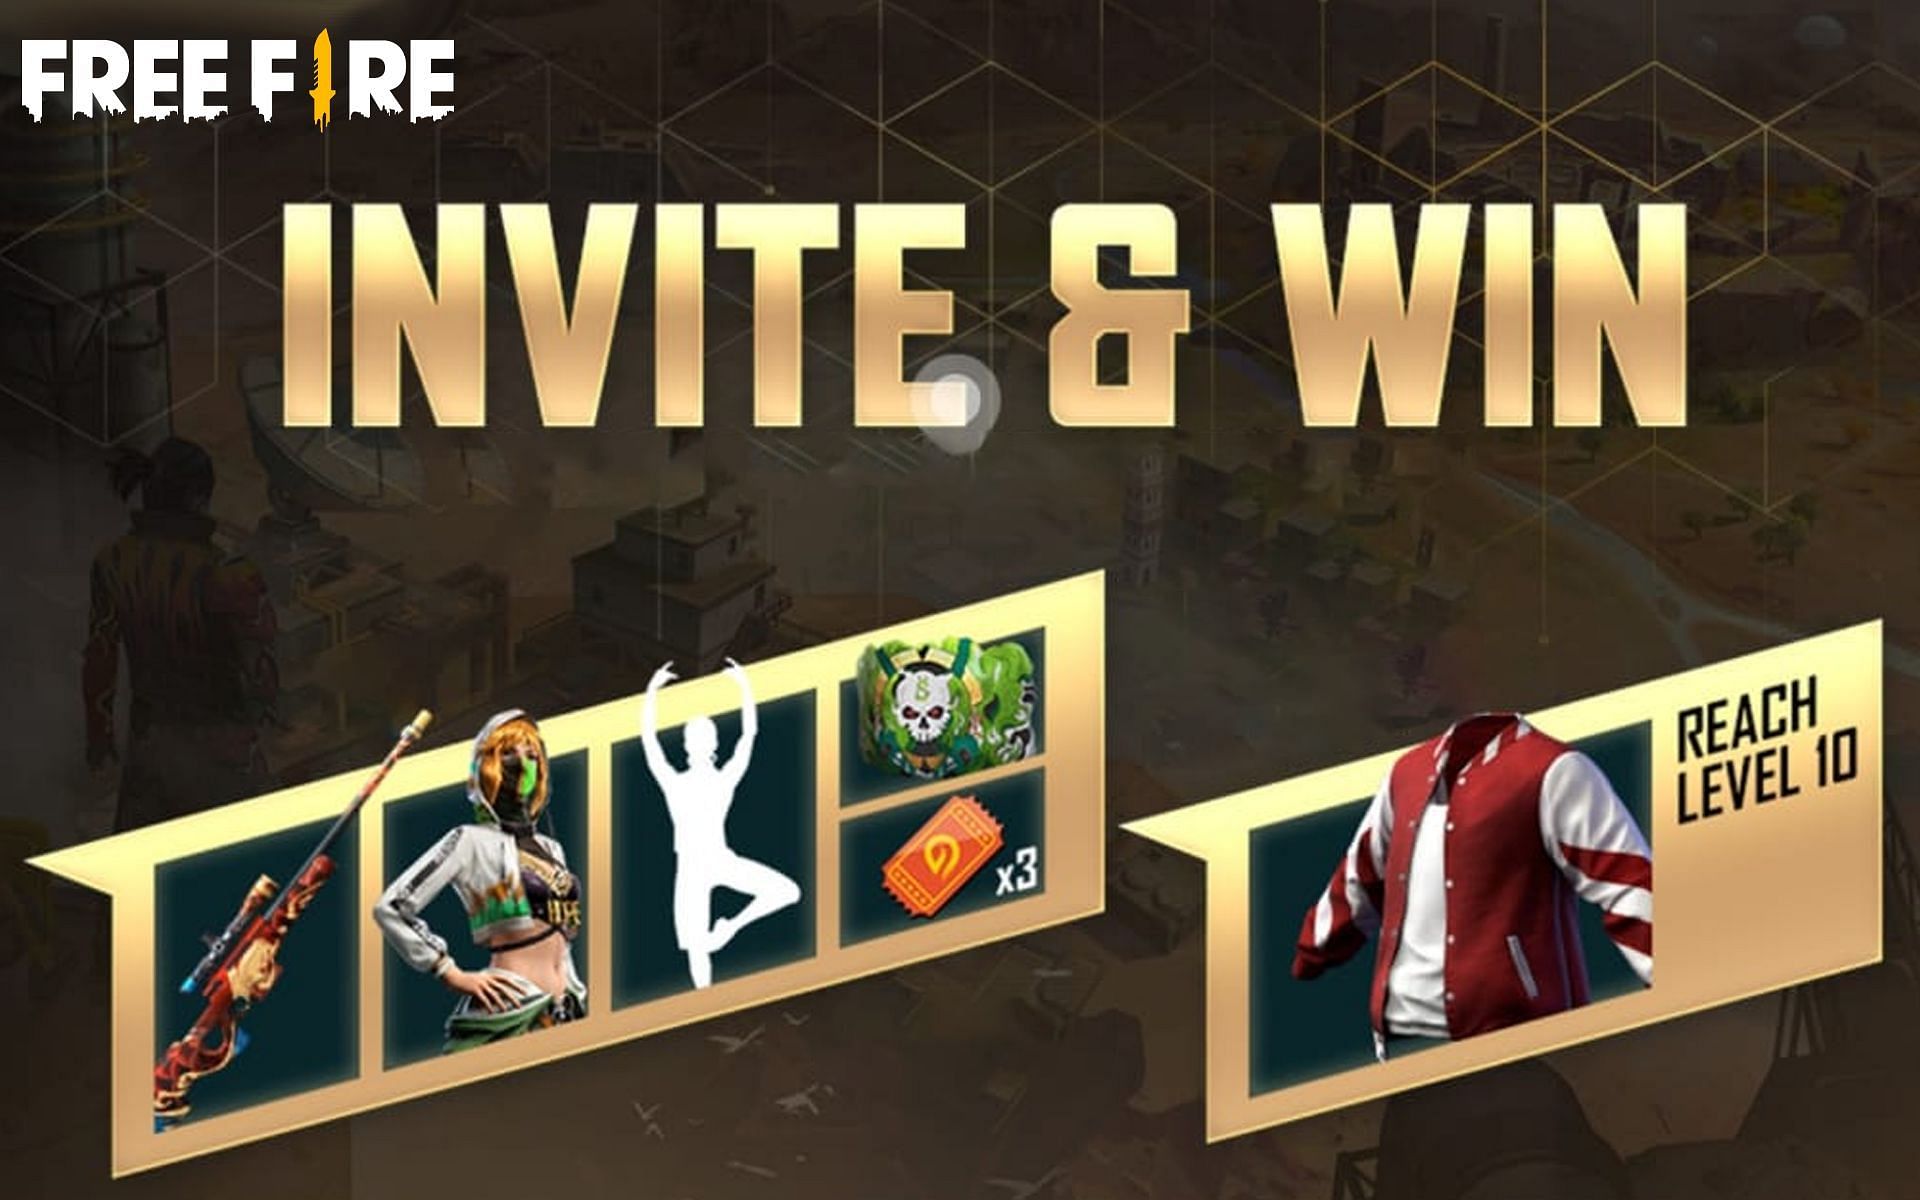  The Invite &amp; Win event (Image via Sportskeeda)